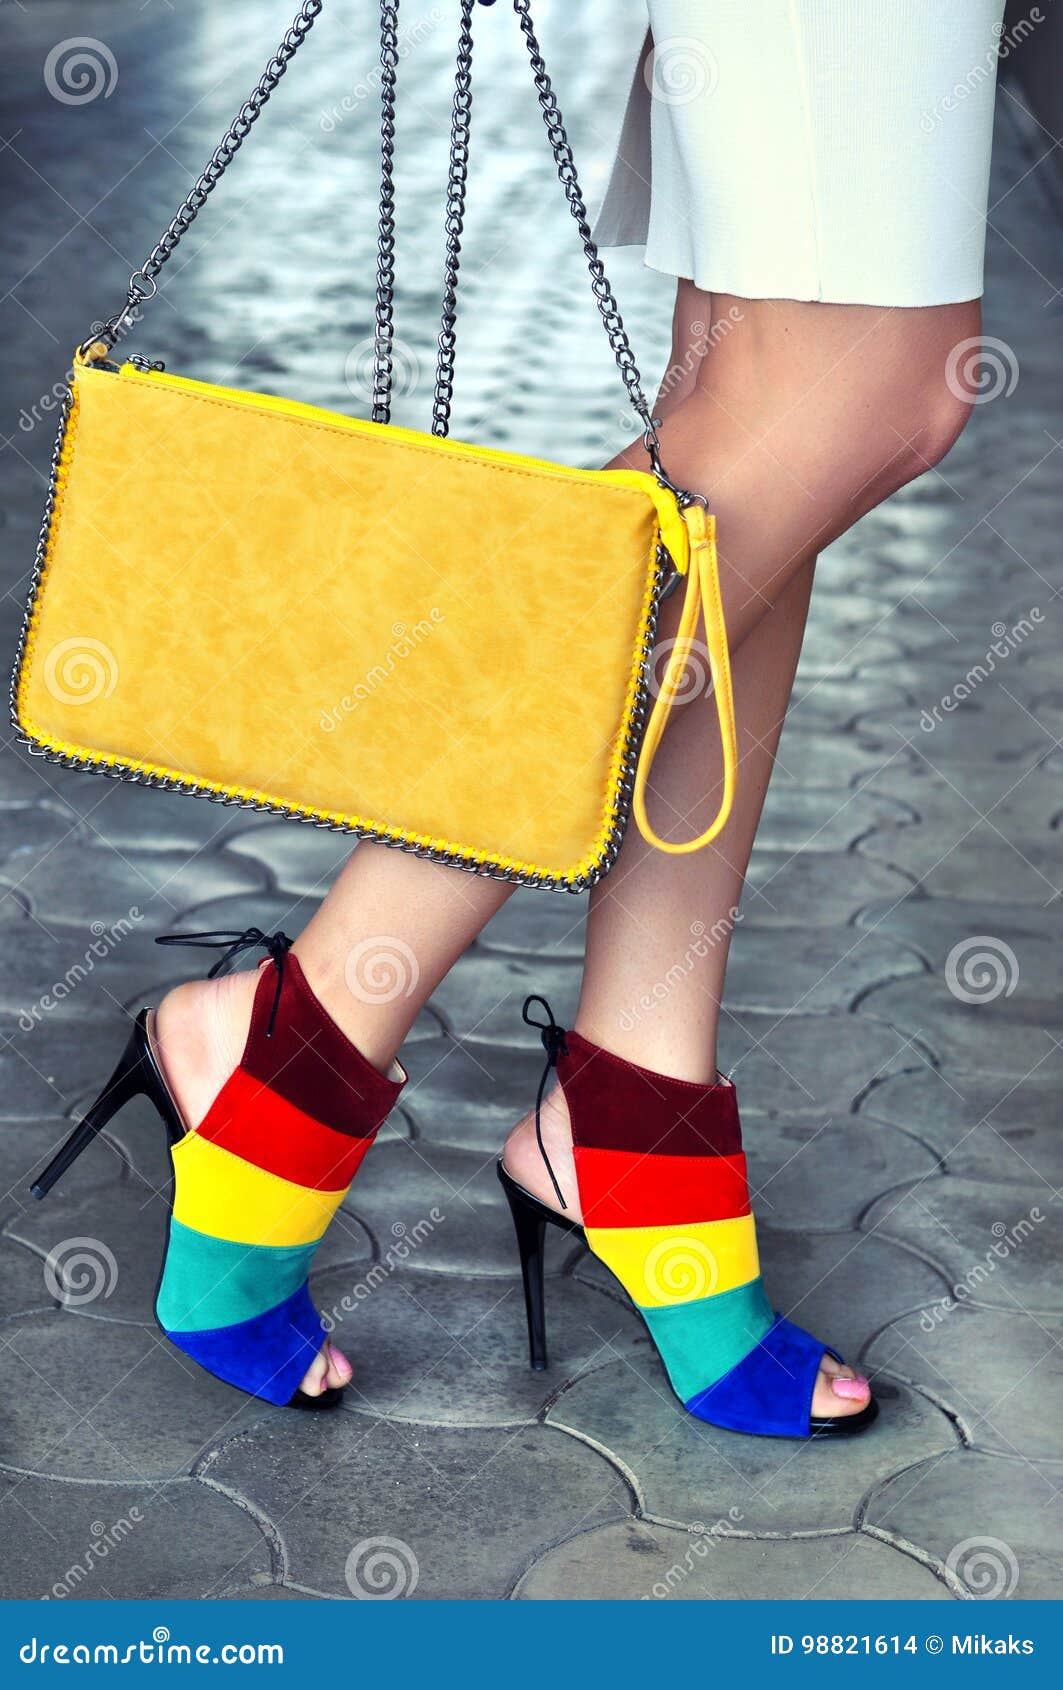 multicolored heels